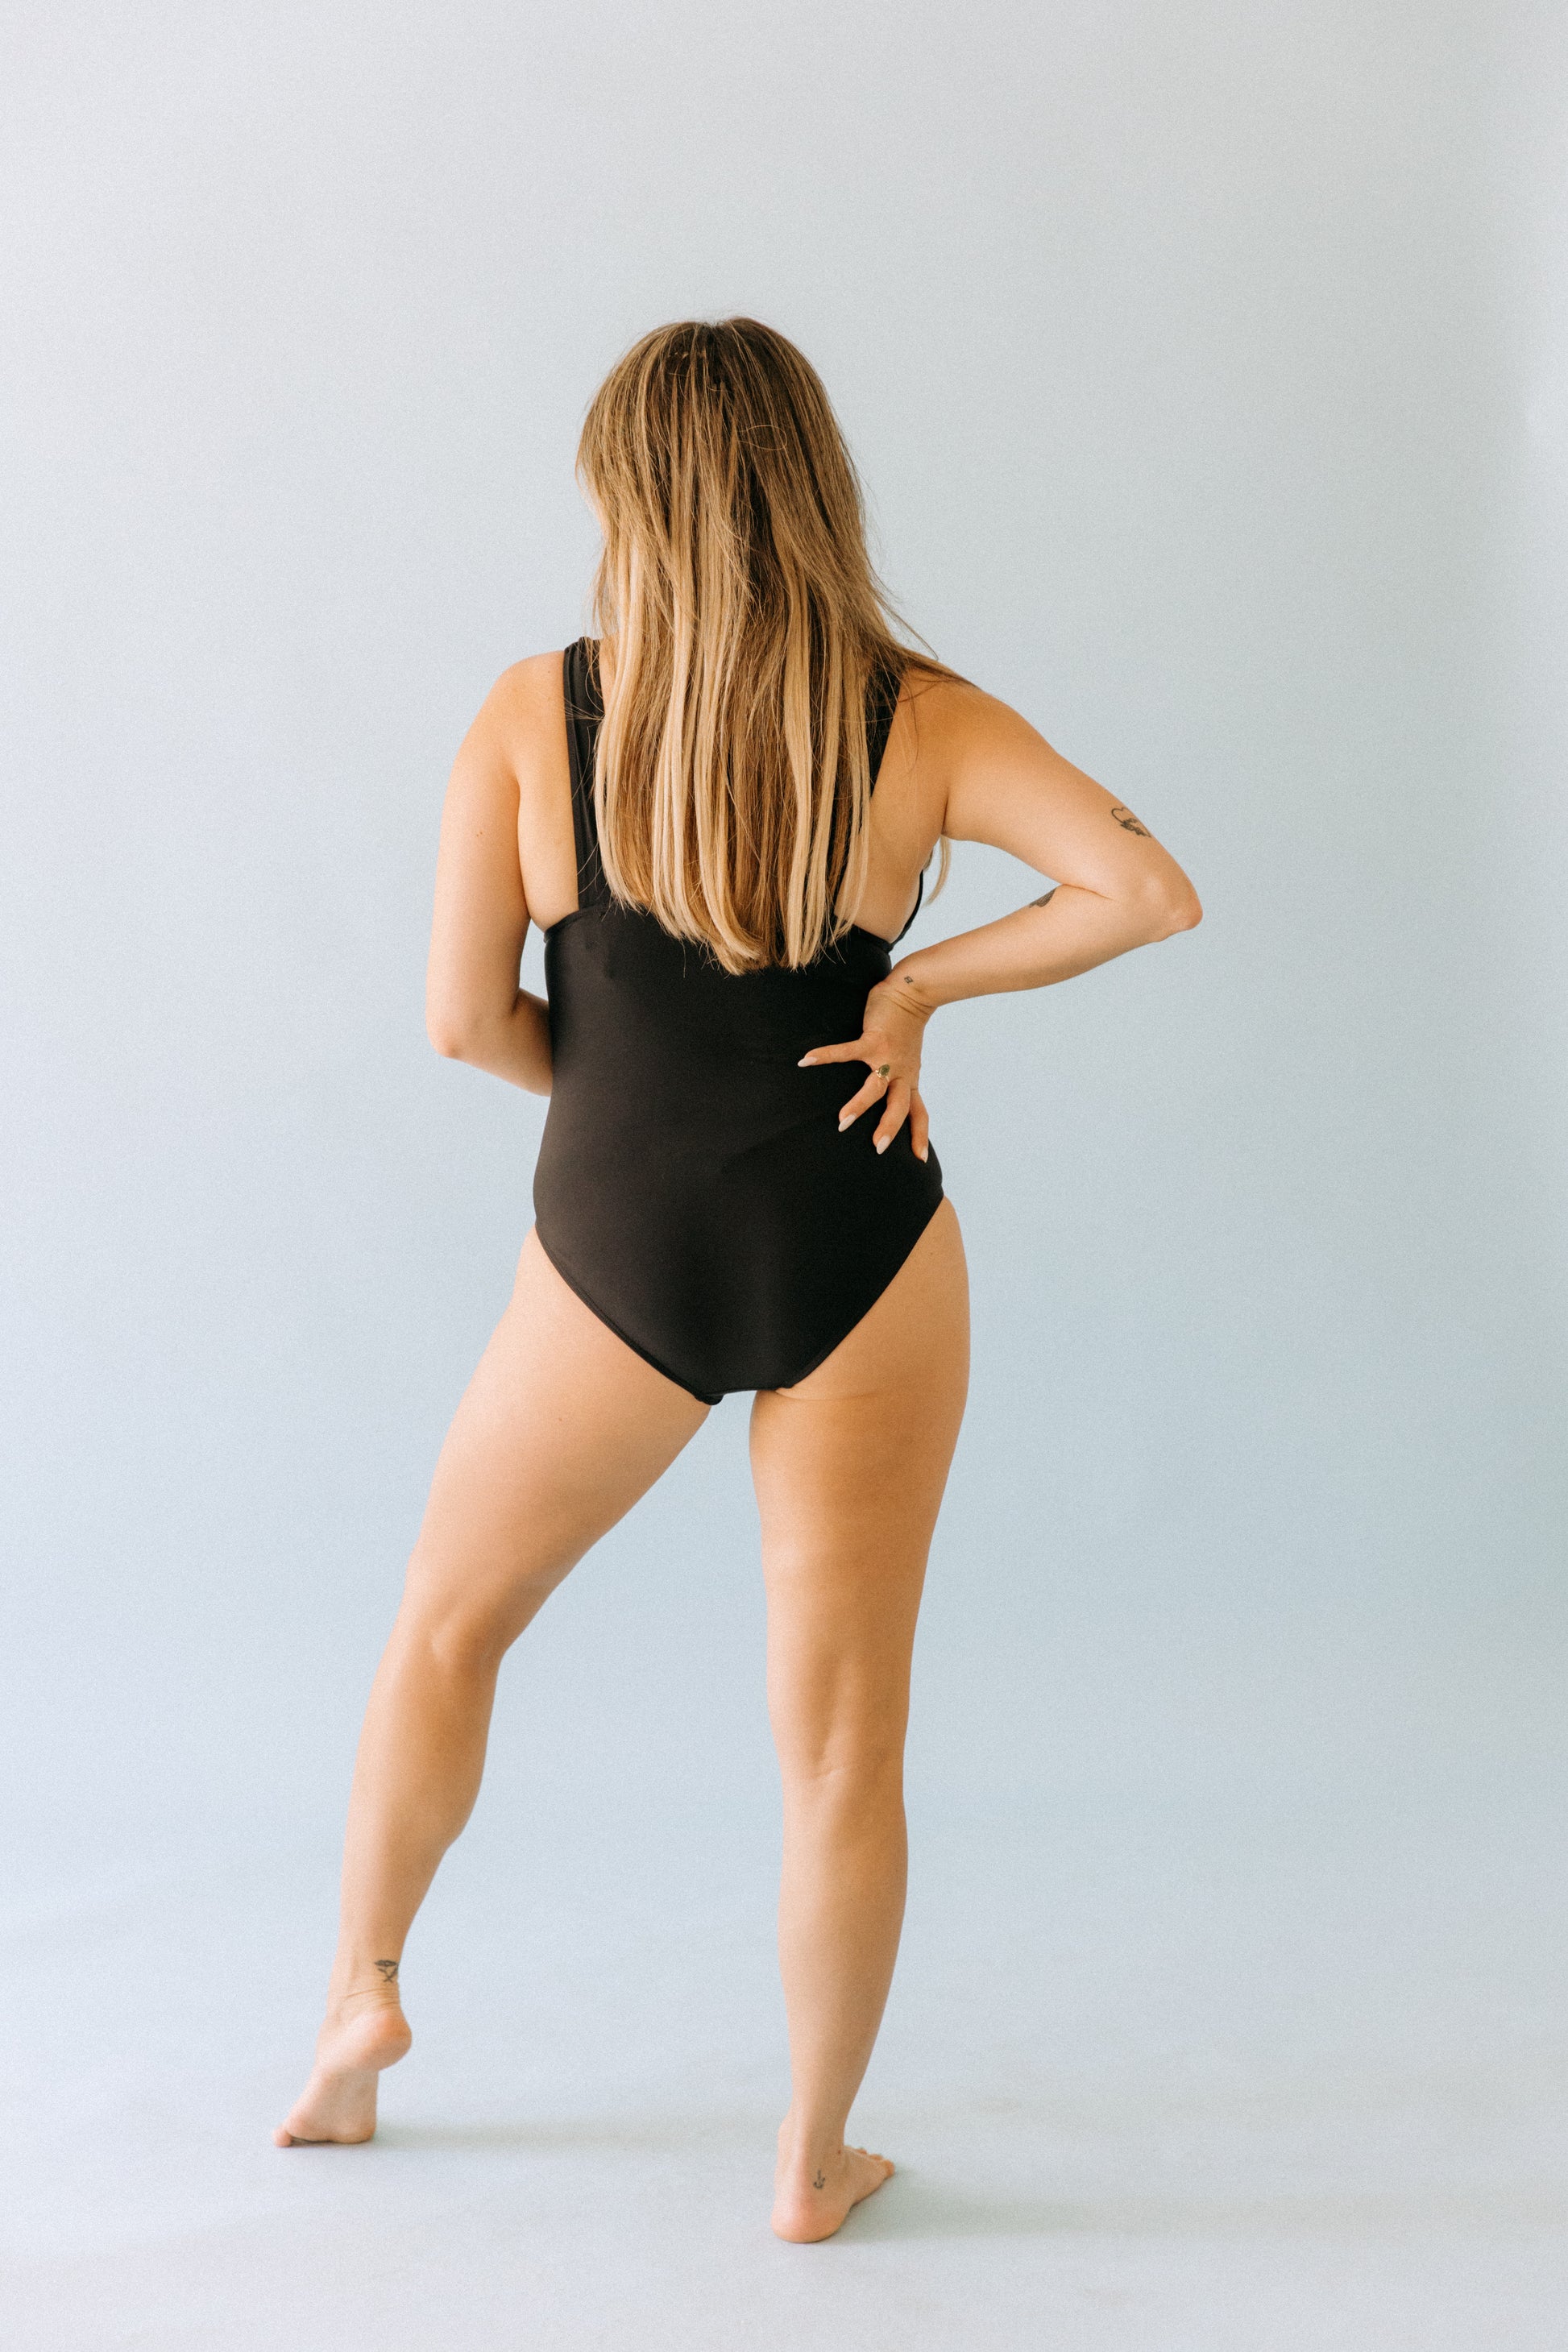 ANGELINA Suspender Swimsuit Bikini – Pomkin